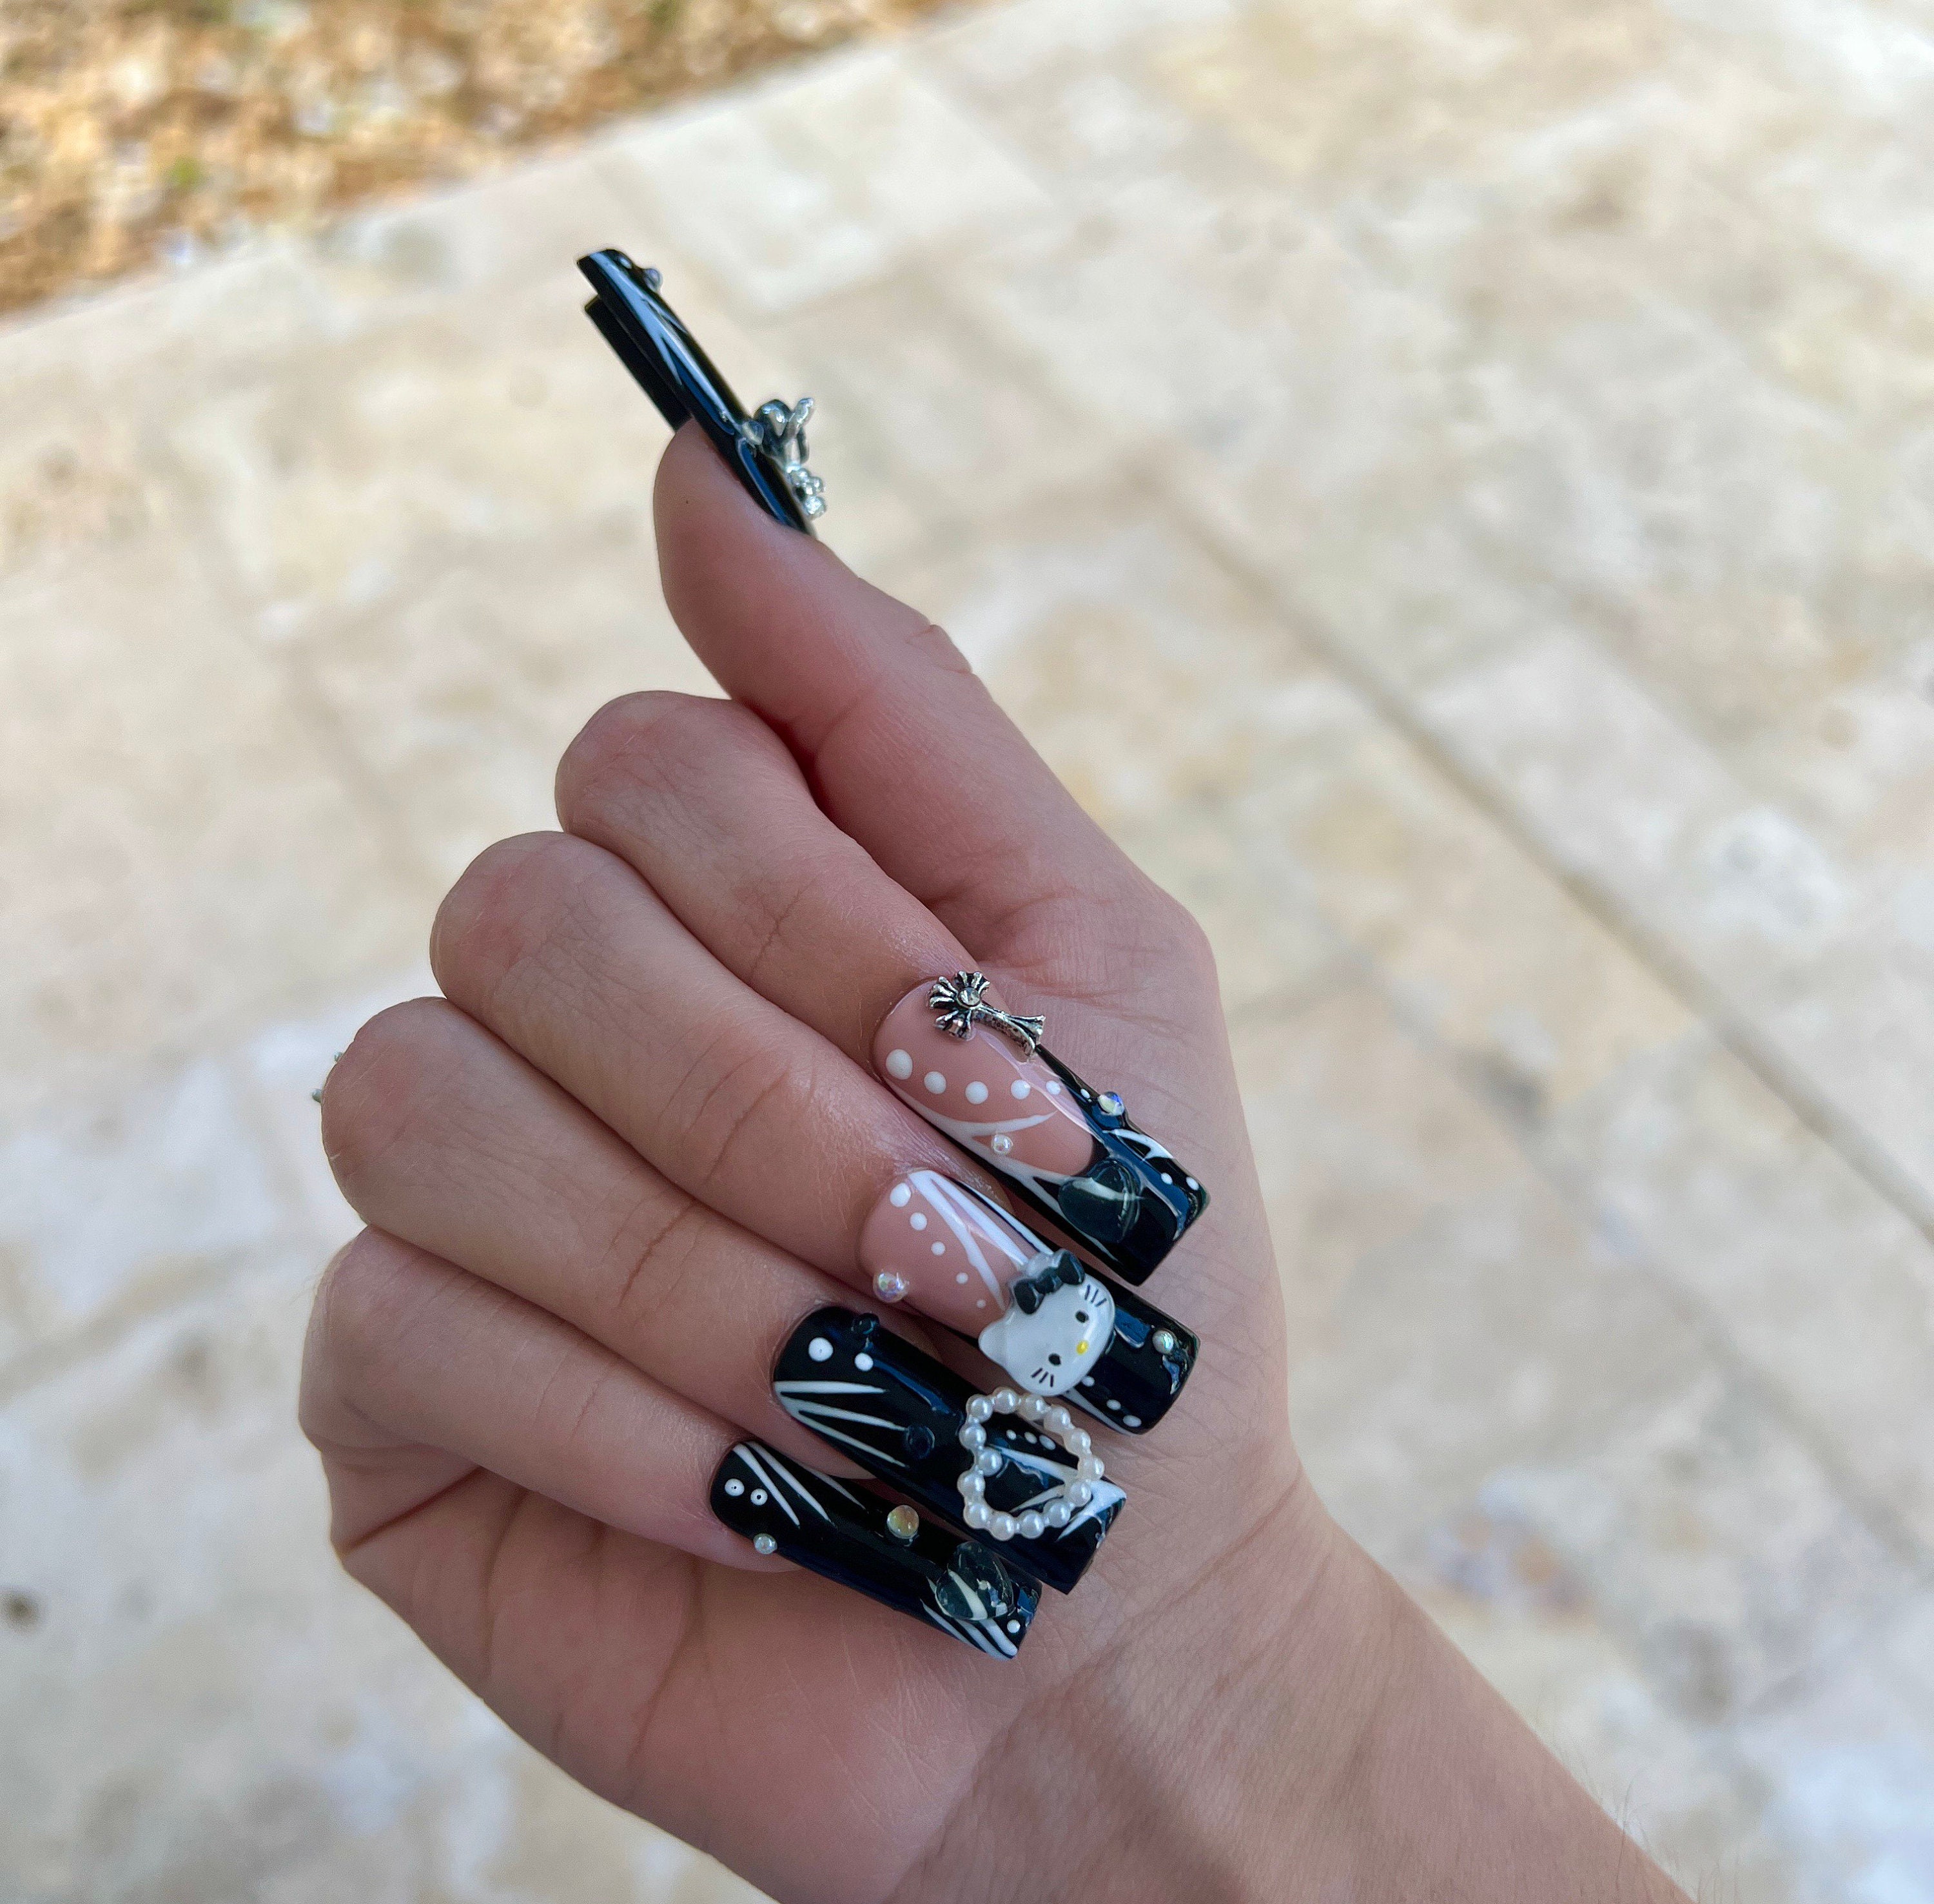 Hello Kitty Junk Charm Nails Using Enail Couture XXL Square Nail